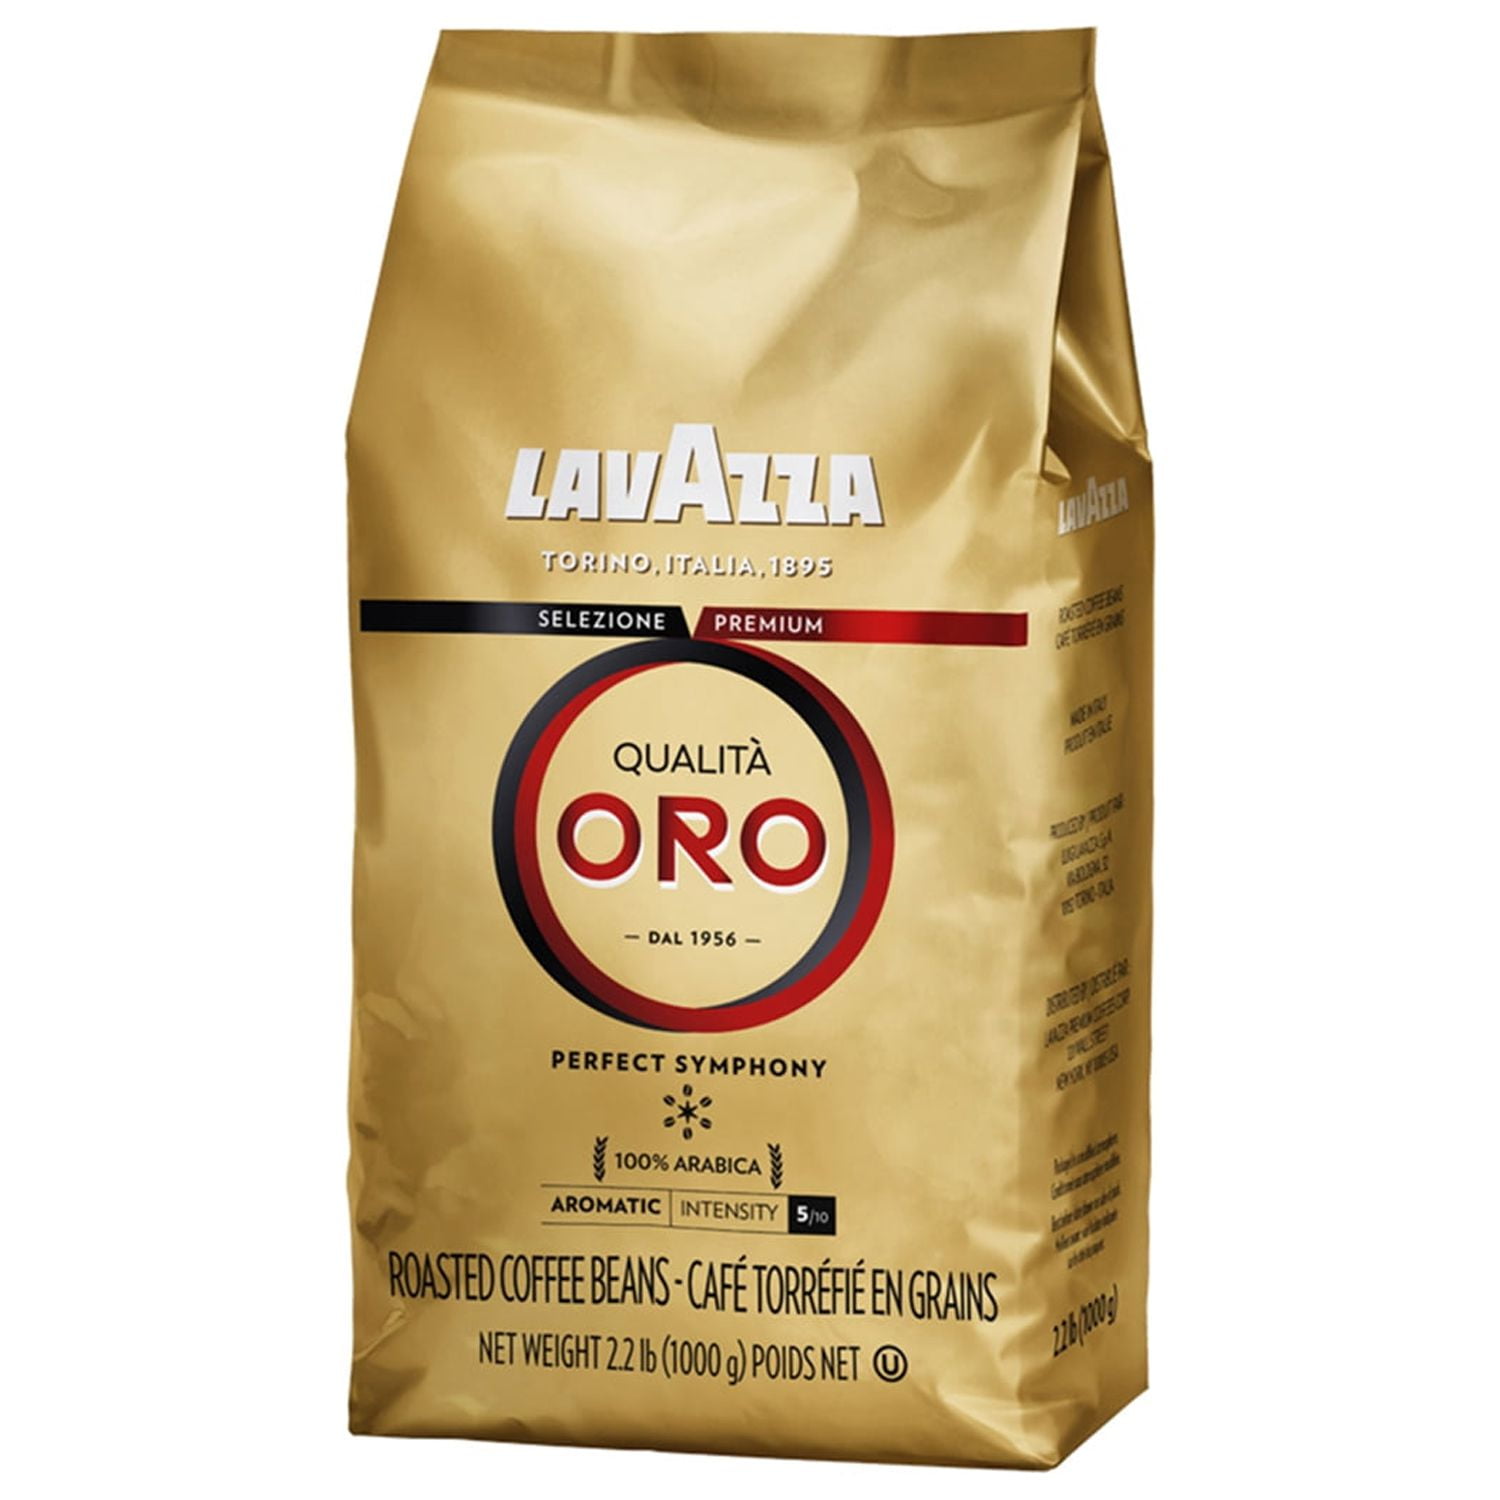 Lavazza Qualita Oro, Whole Bean Coffee, Medium Roast, 35.2 oz Bag